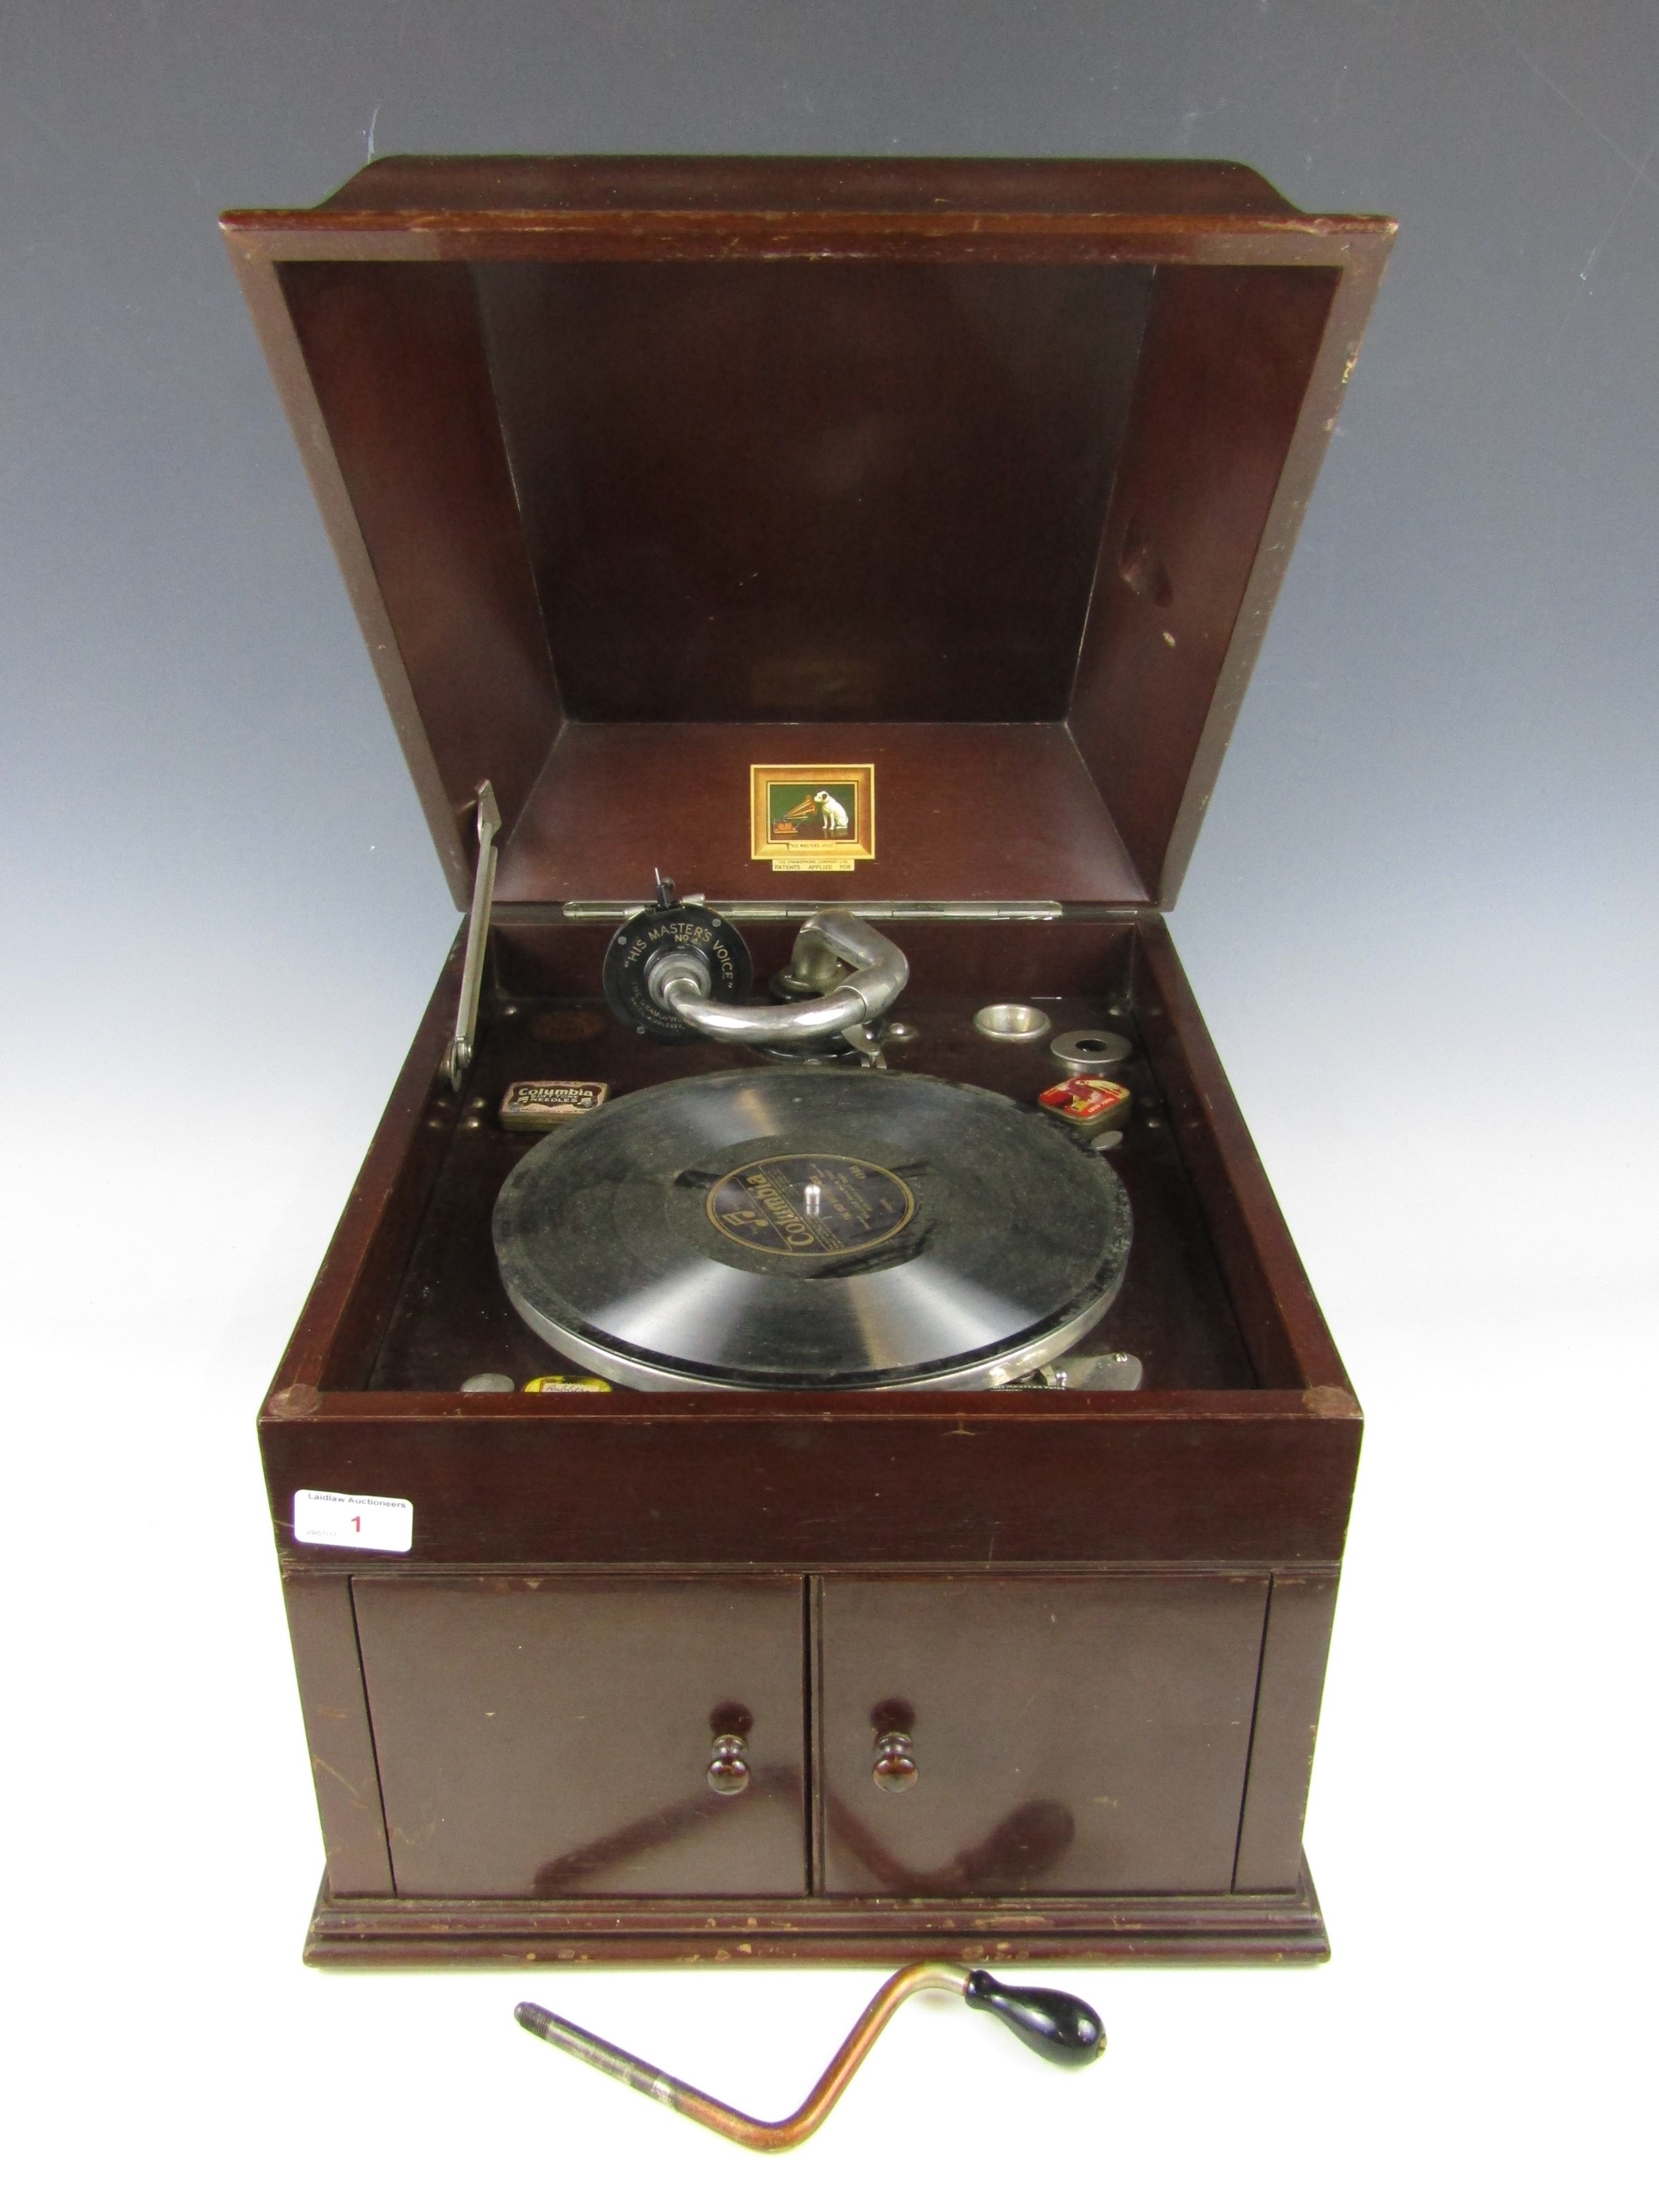 A vintage HMV gramophone